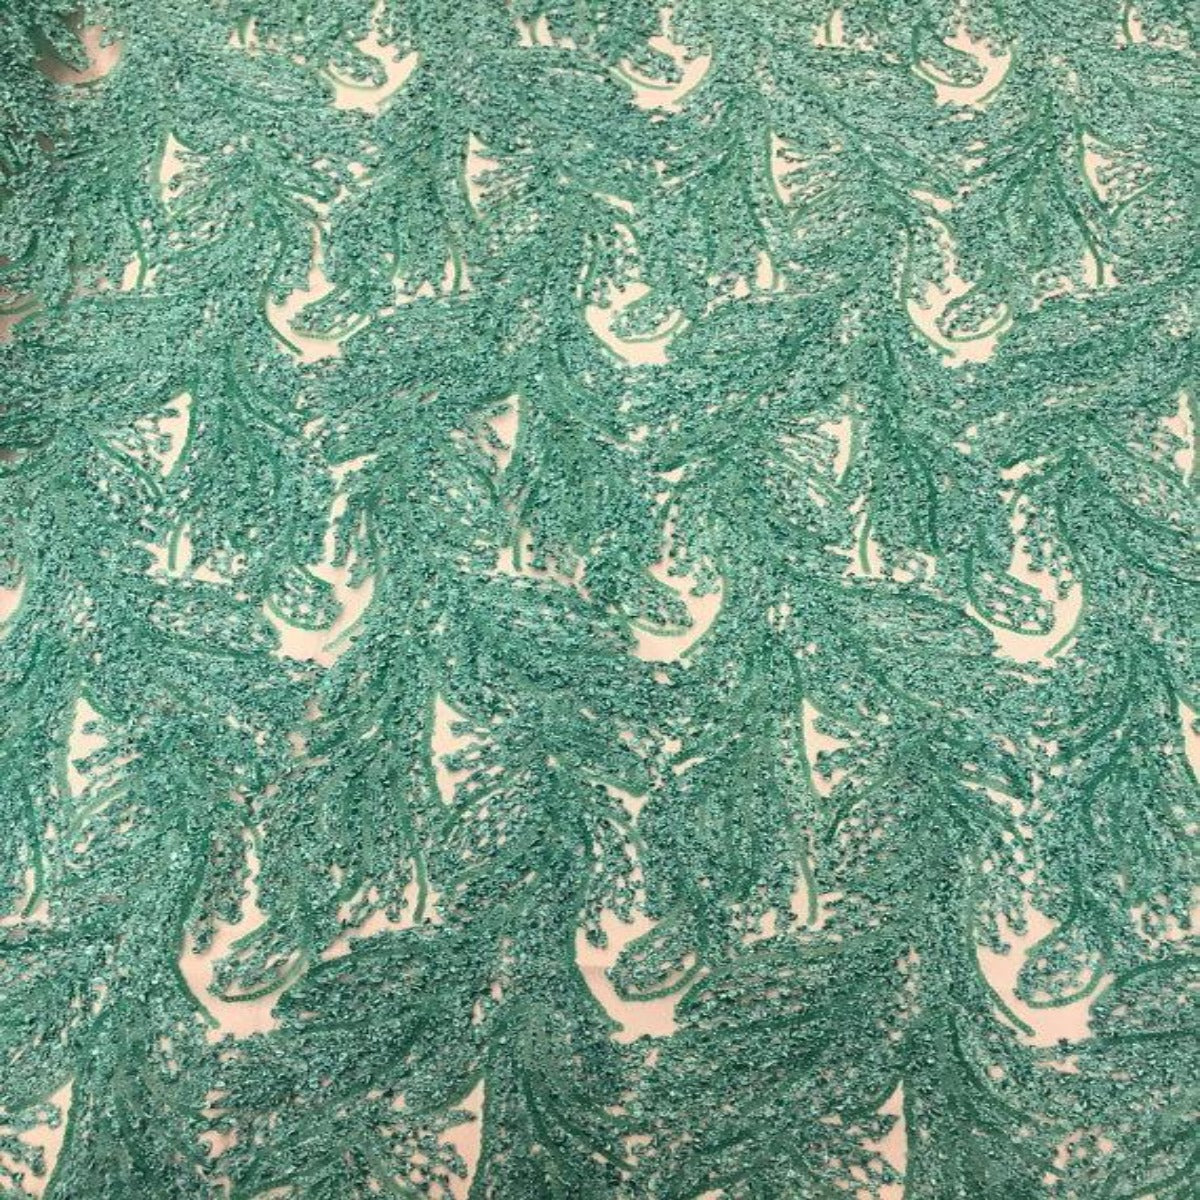 Teal Cozy Pop Thread Floral Sequins Lace Fabric - Fashion Fabrics LLC